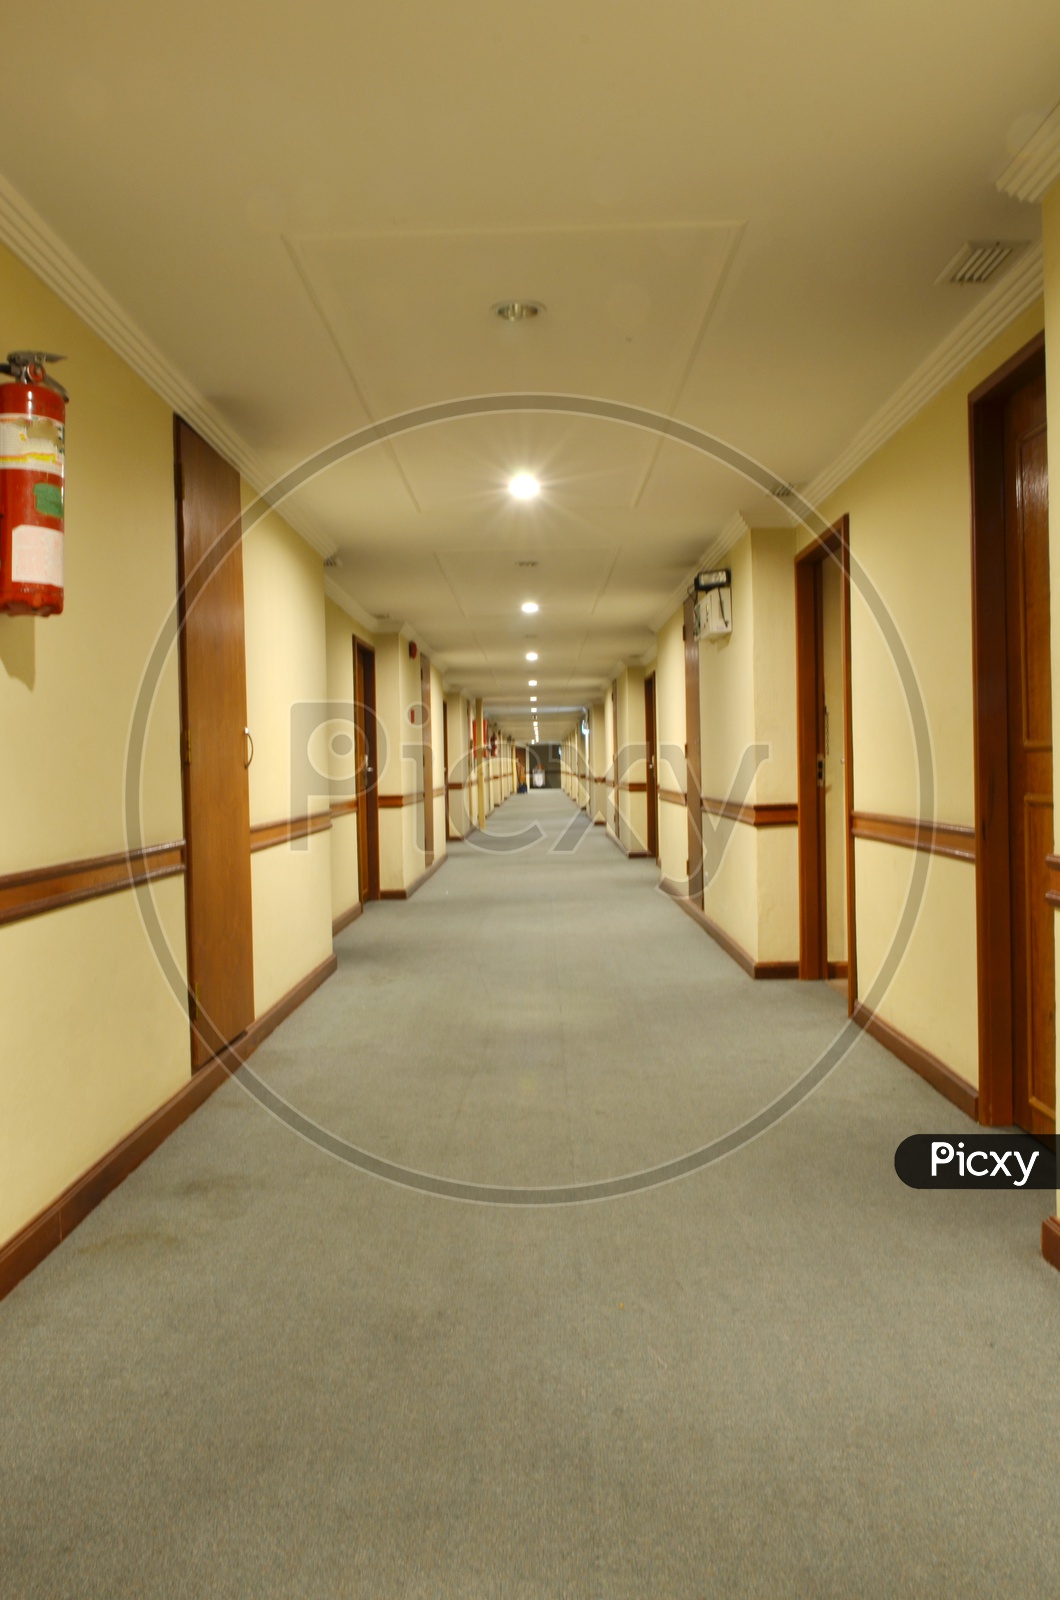 Hotel Corridor With Carpet